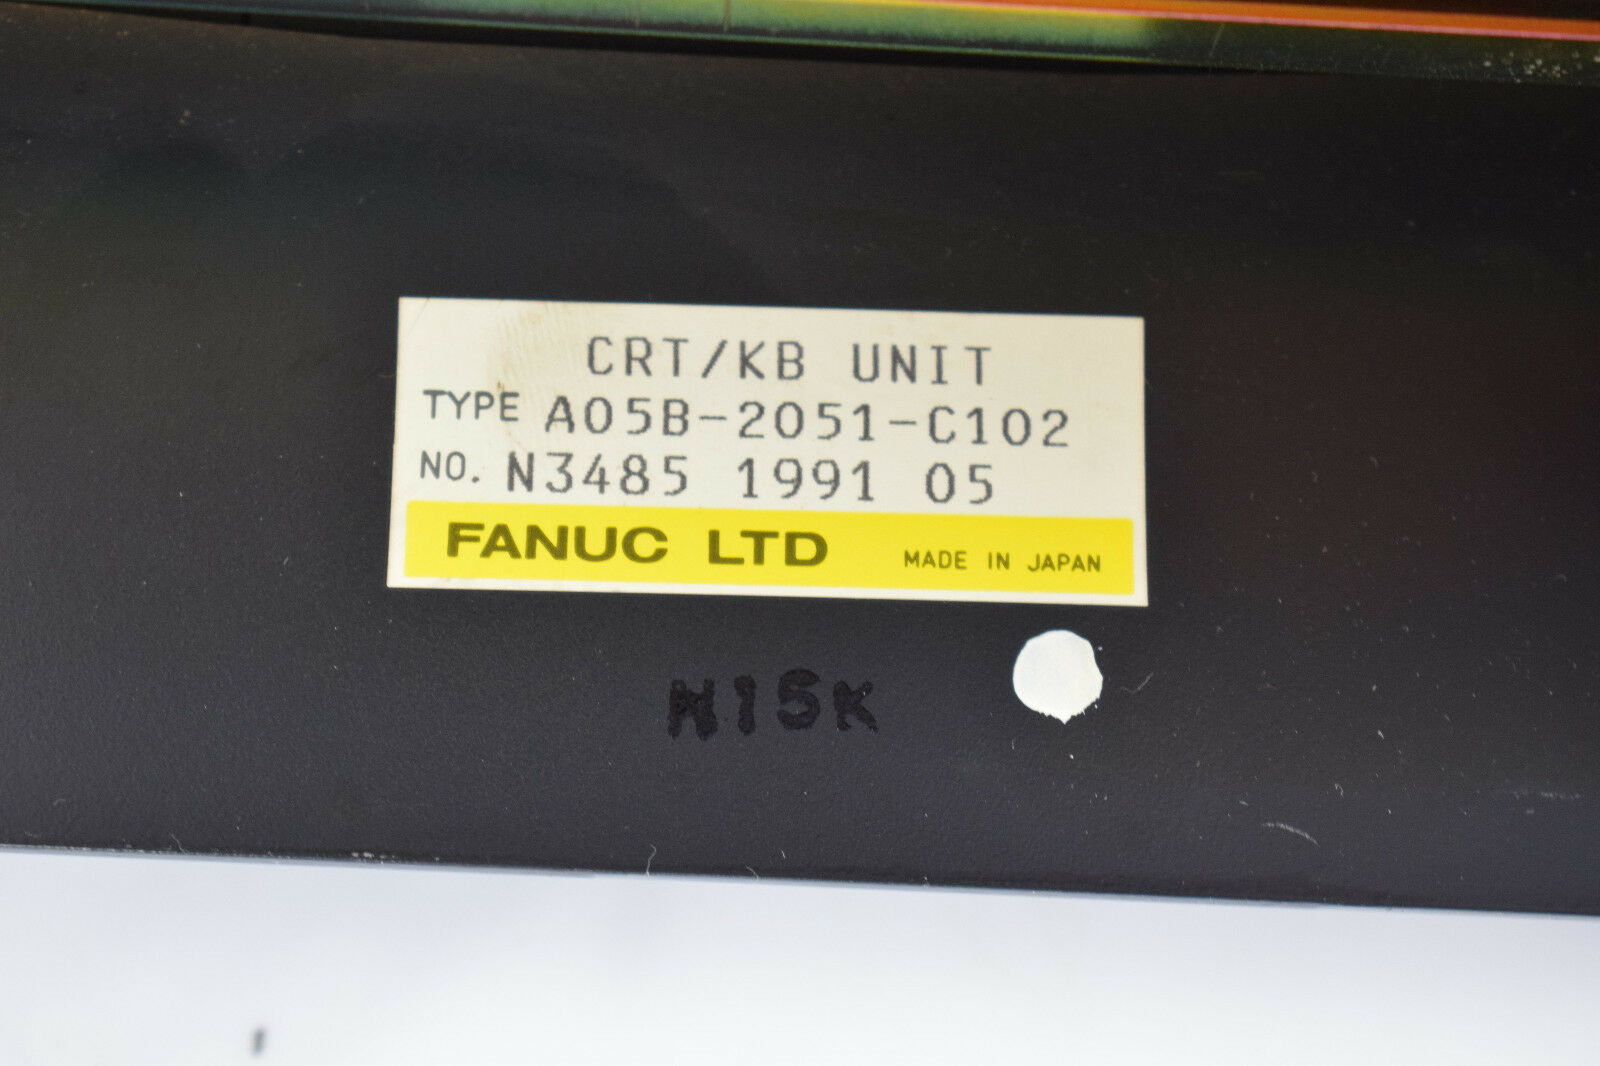 Fanuc Ltd CRT/KB Unit A05B-2051-C102 